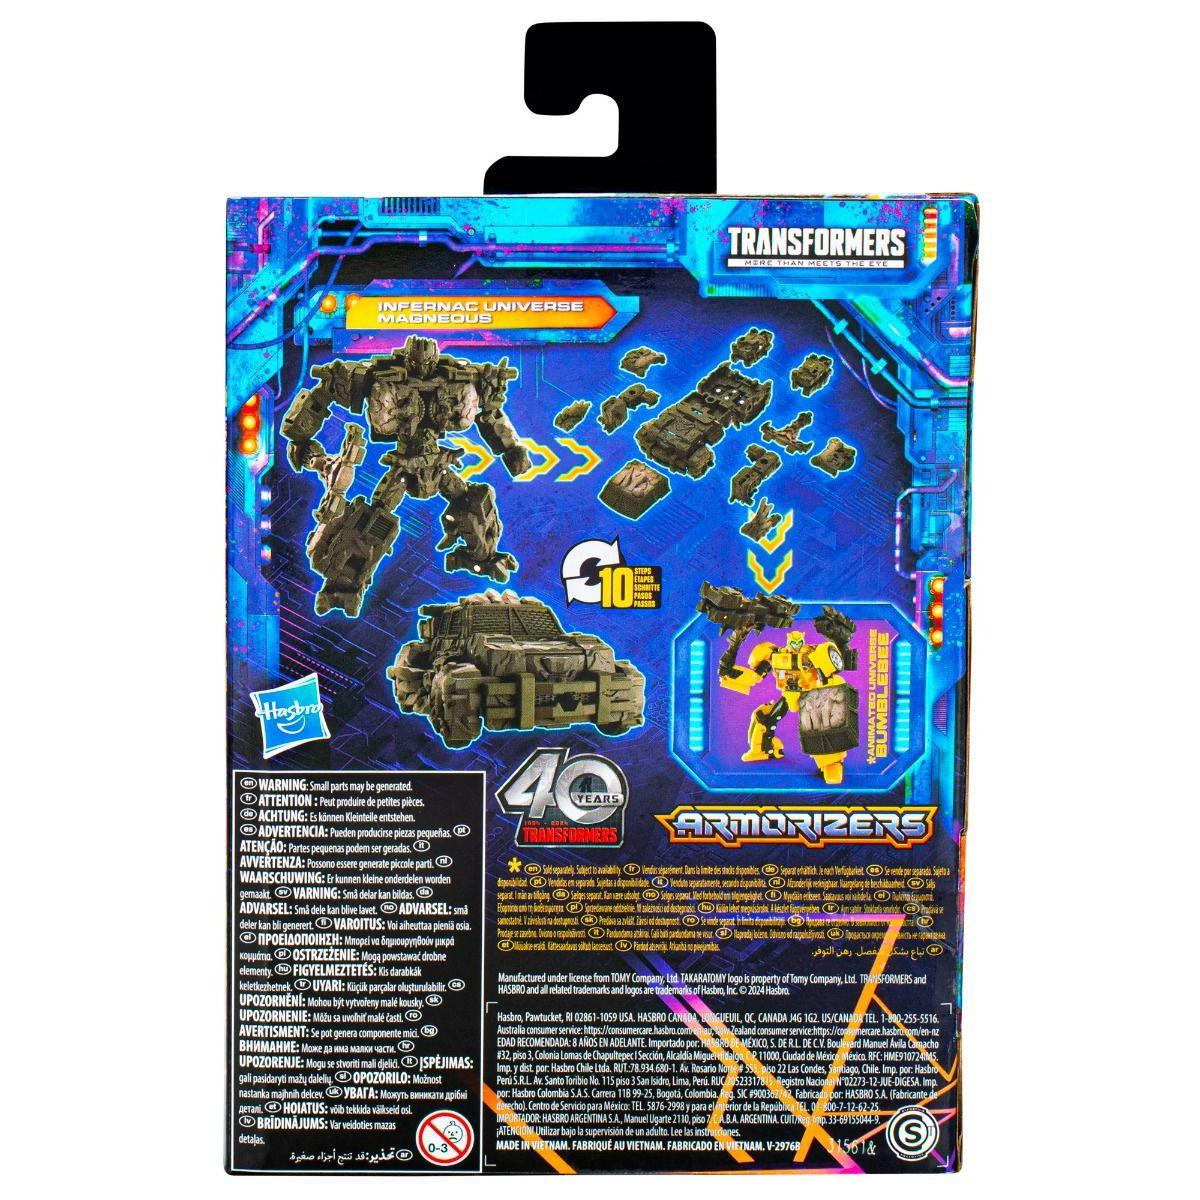 26058 Transformers Legacy United: Deluxe Class - Infernac Universe Magneous - Hasbro - Titan Pop Culture